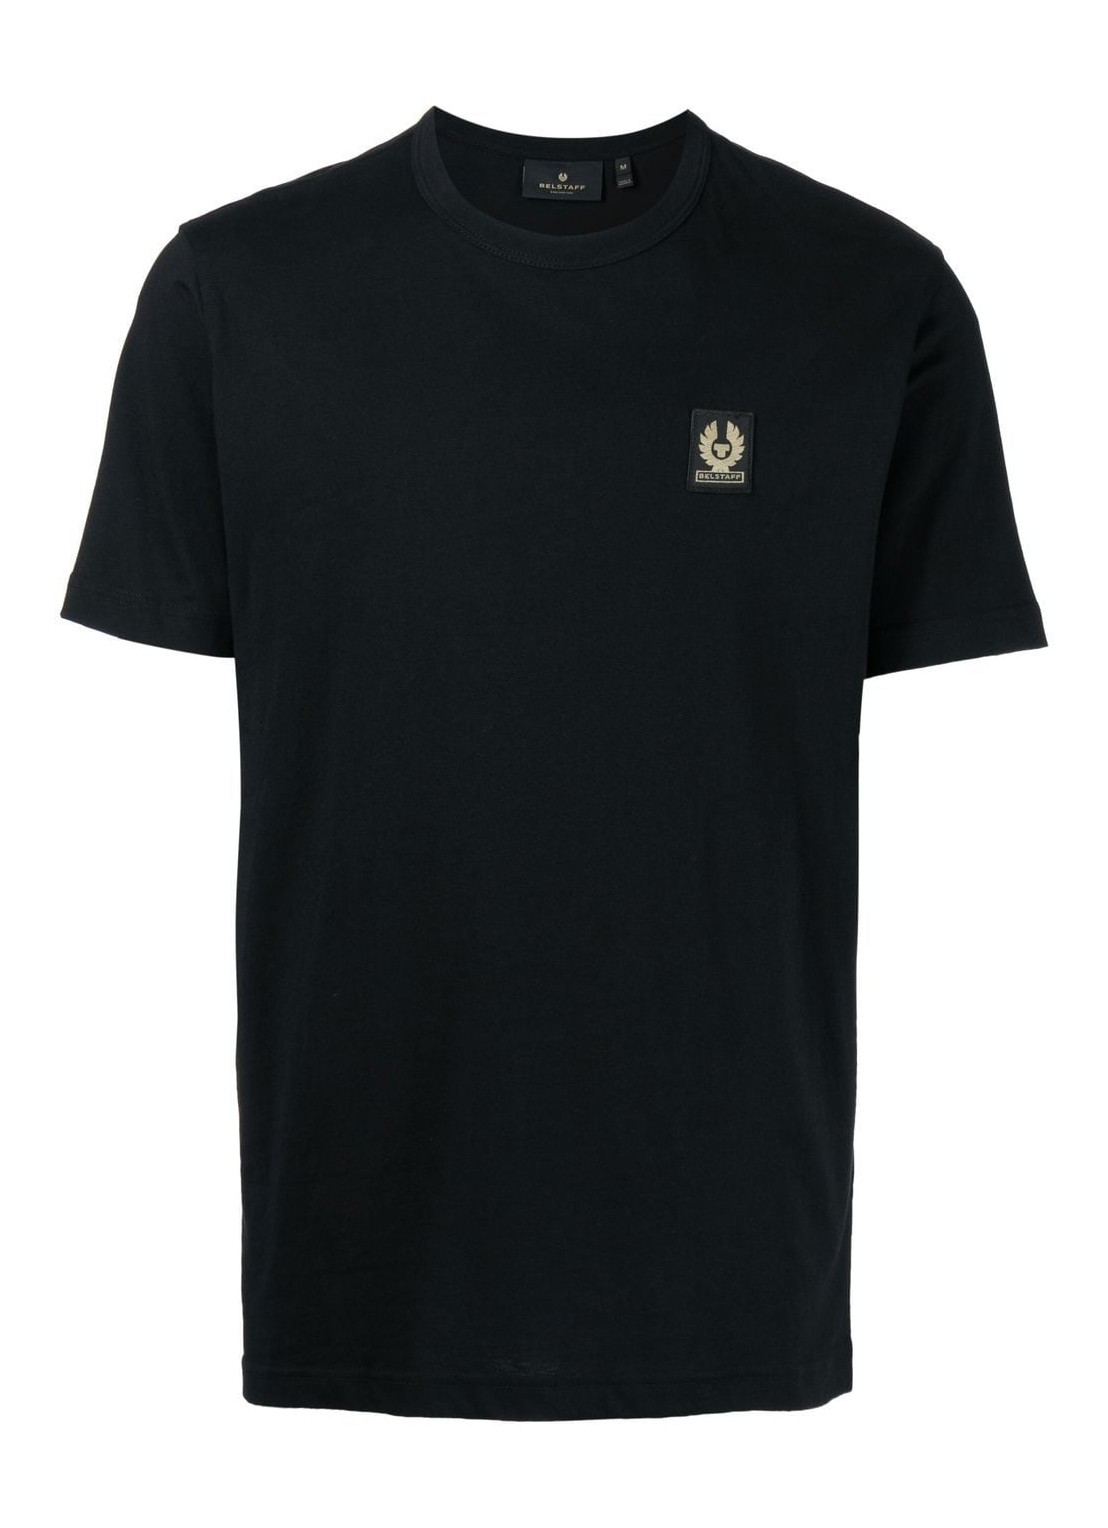 Camiseta belstaff t-shirt man belstaff t-shirt 100055 black talla negro
 